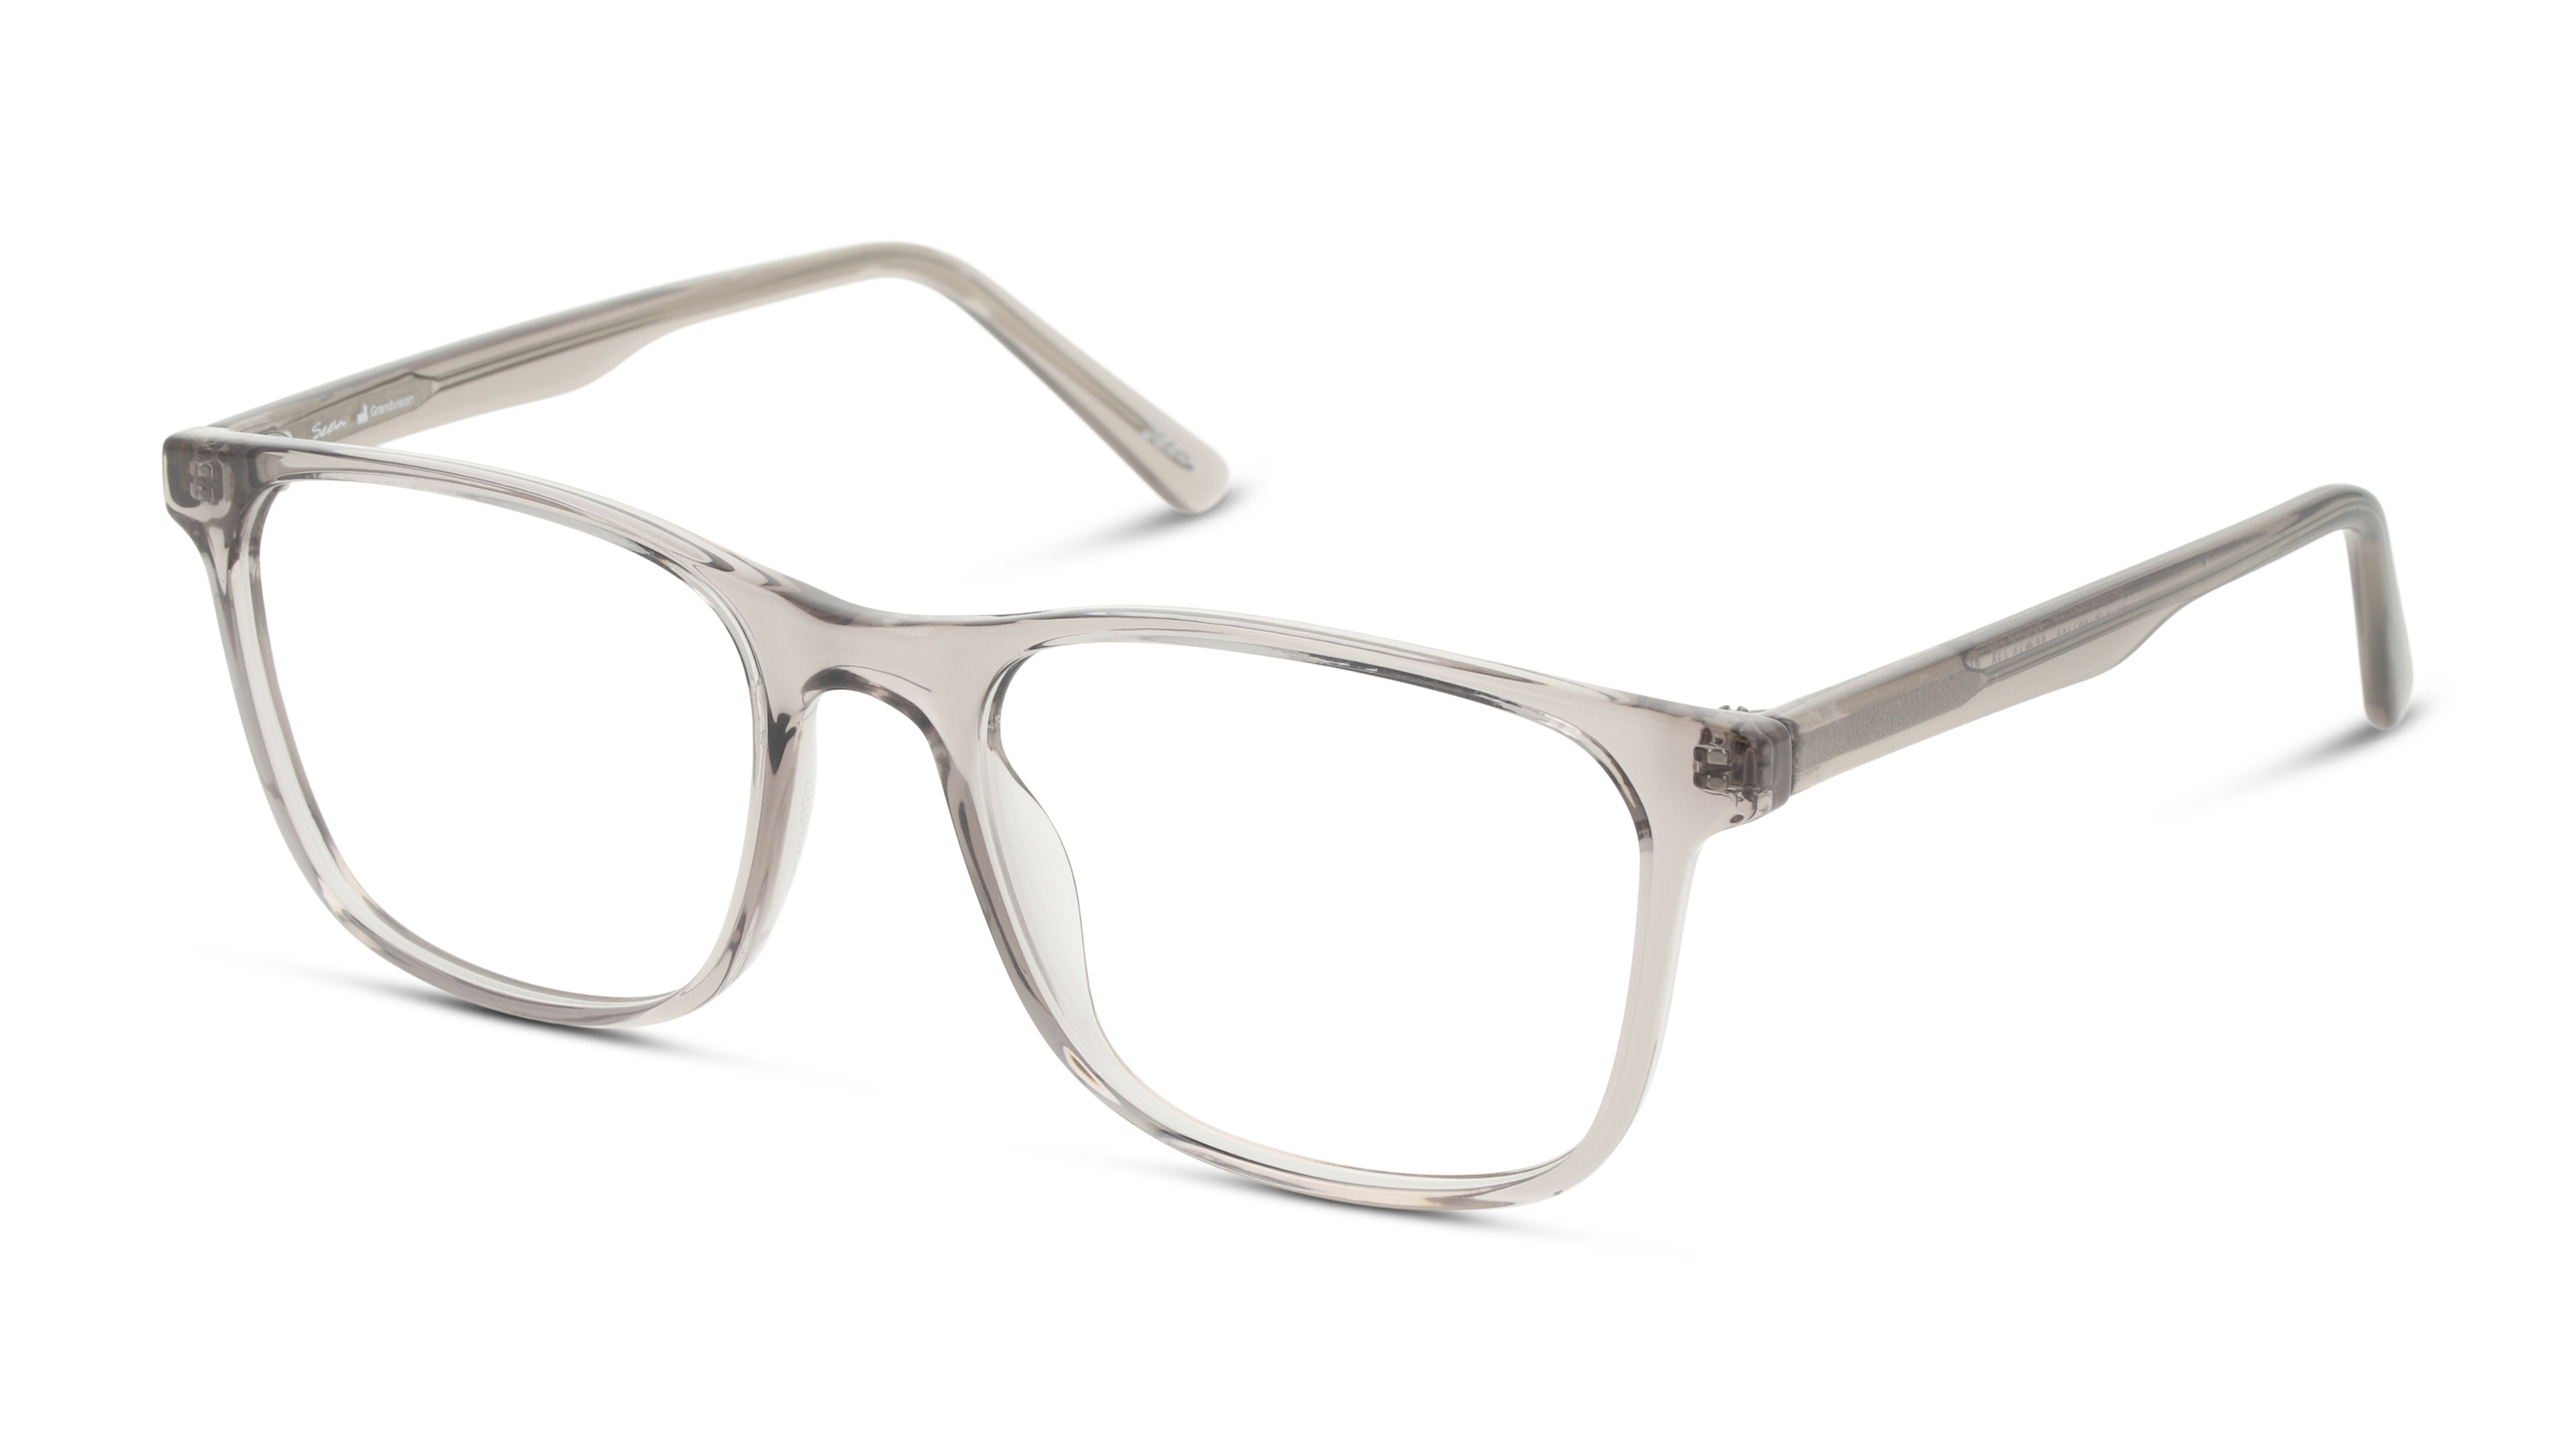 Angle_Left01 Seen SN OM5006 Glasses Transparent / Black